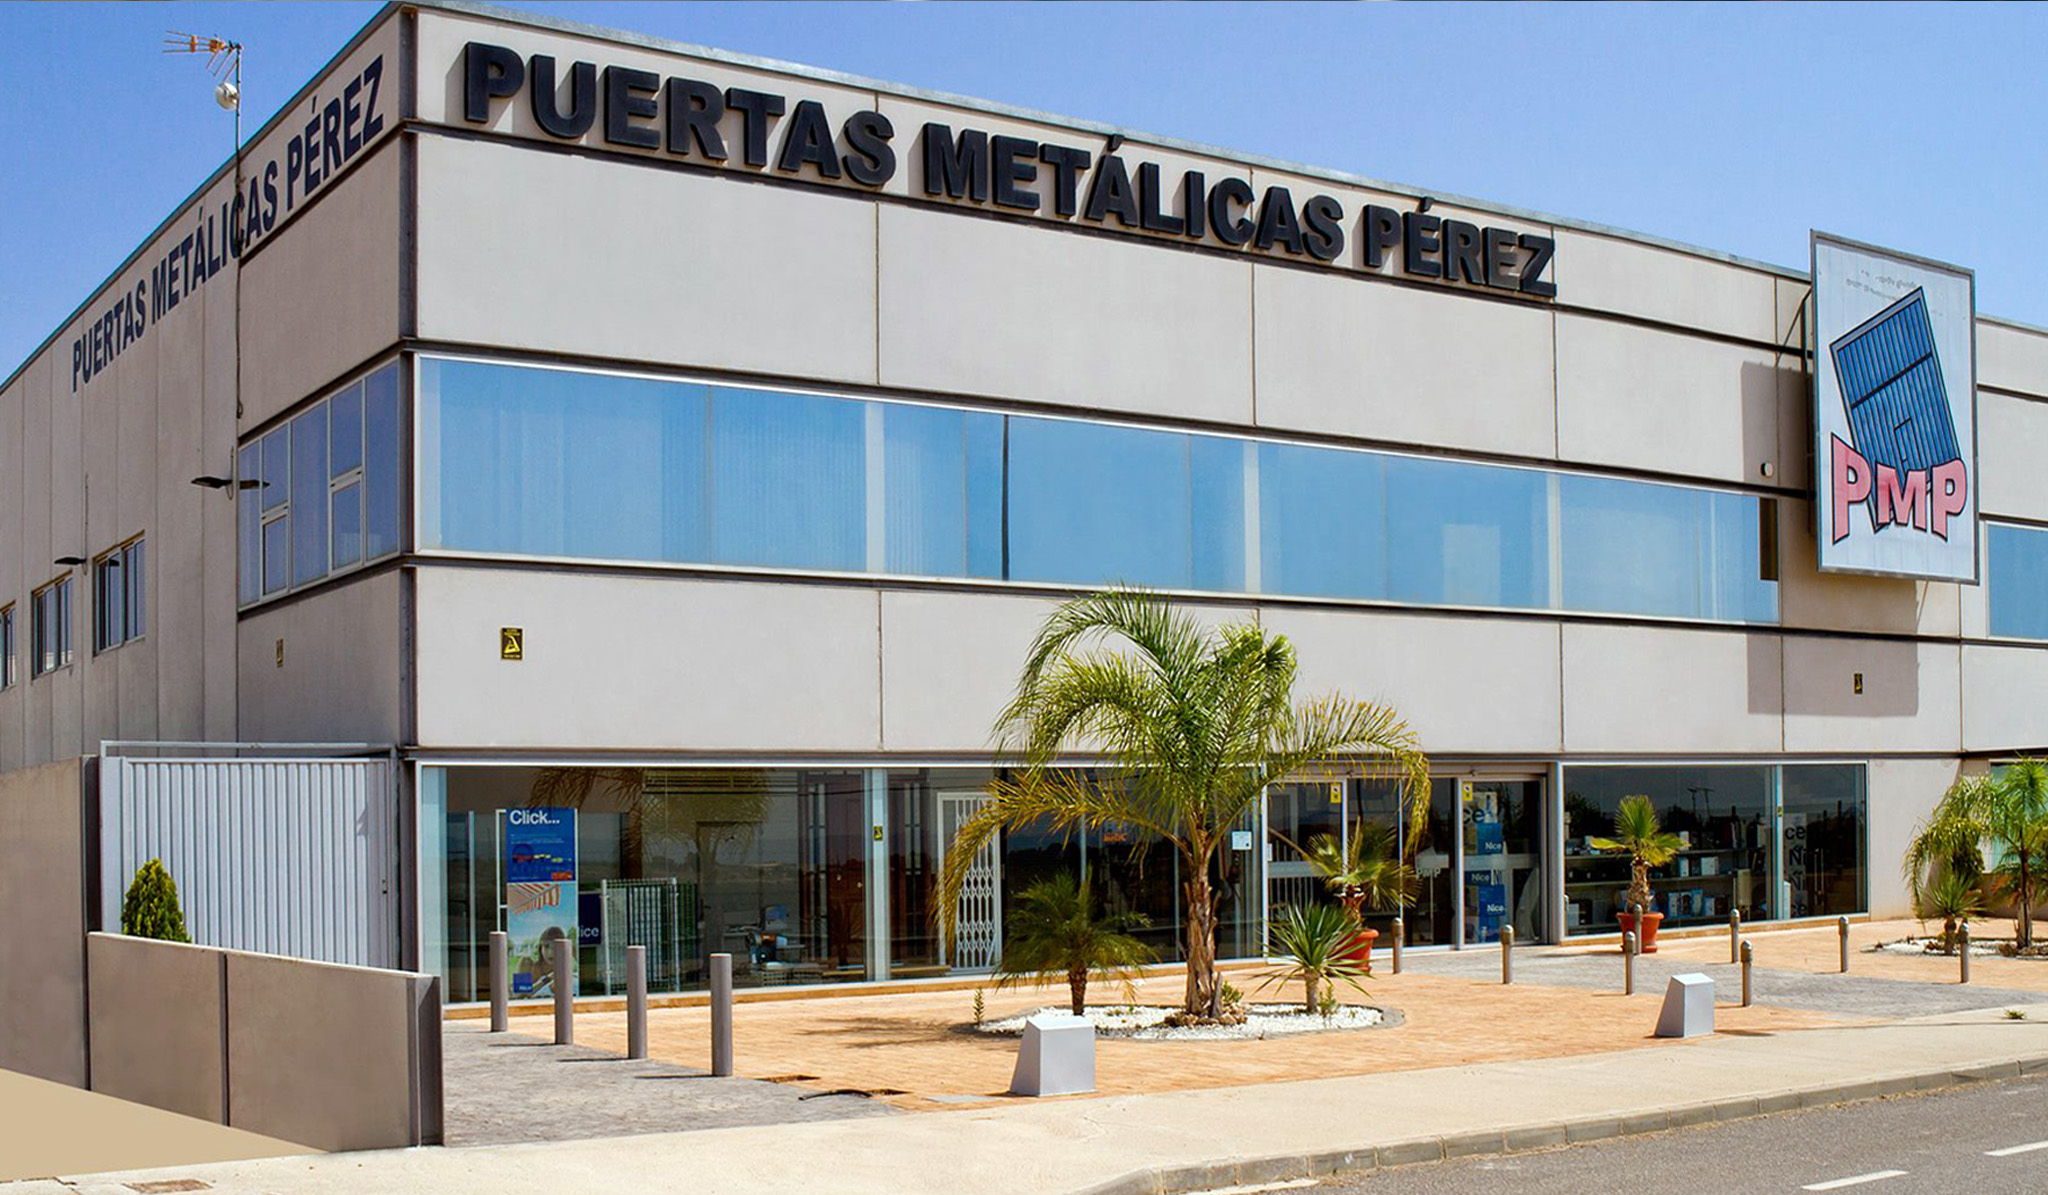 Puertas Metálicas Pérez. Murcia